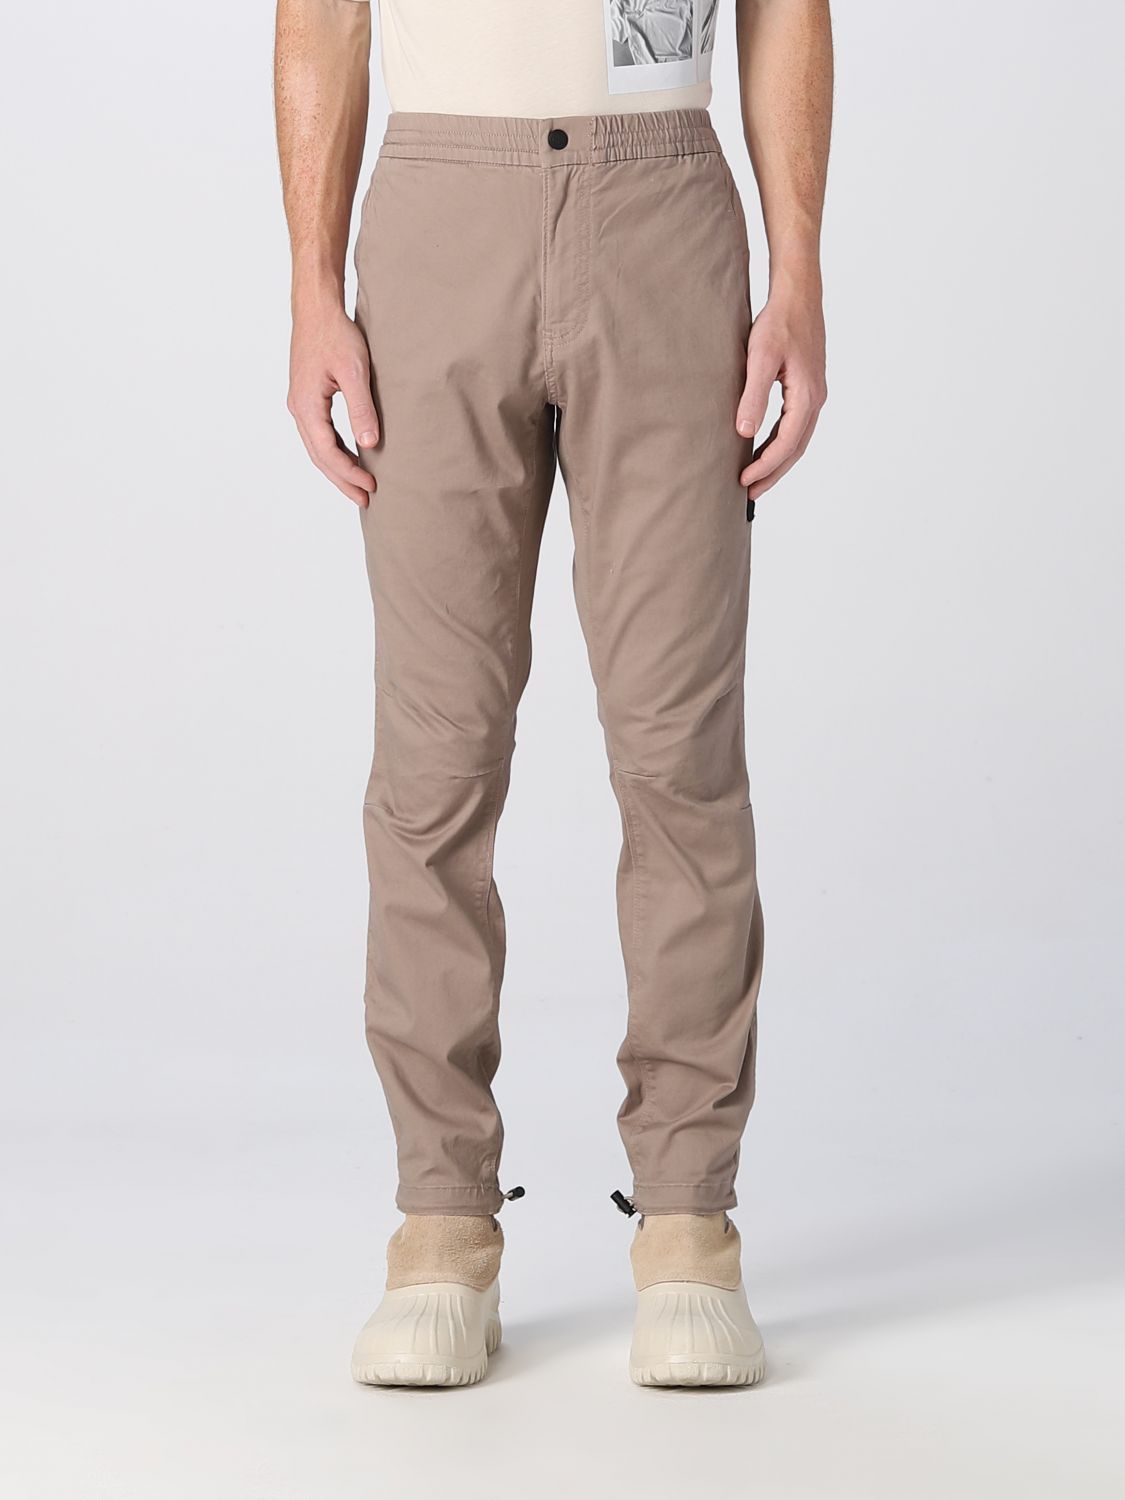 CALVIN KLEIN JEANS: pants for man - Beige | Calvin Klein Jeans pants  J30J322041 online on 